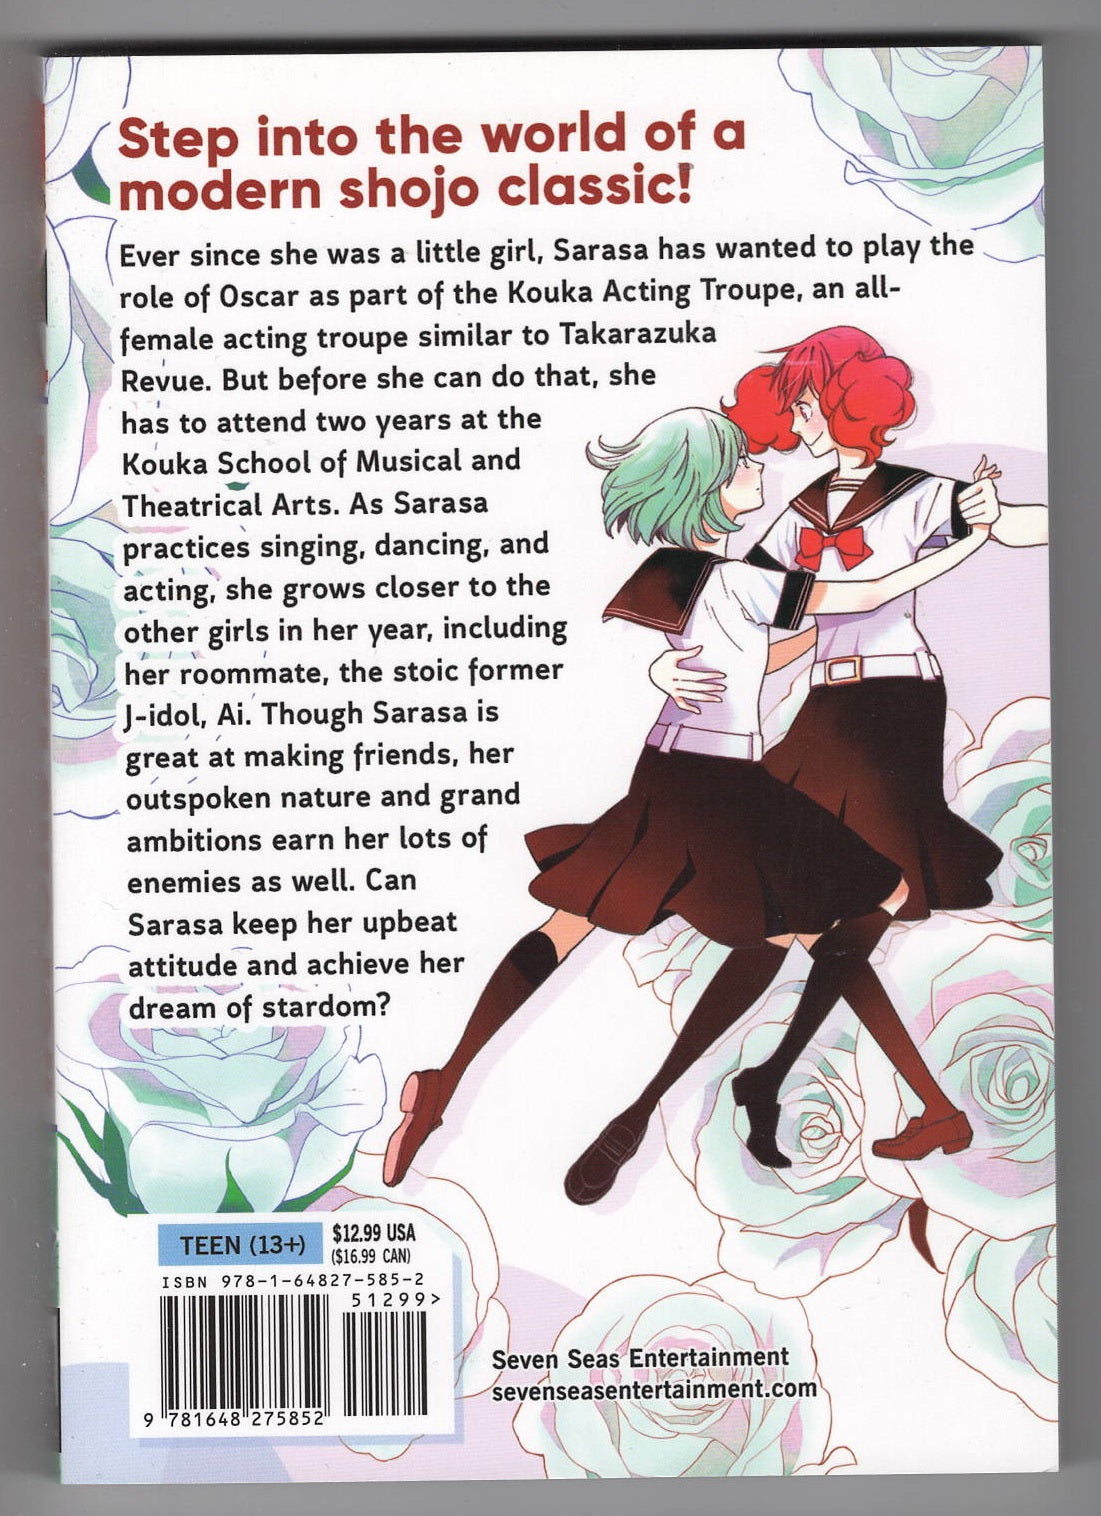 Kageki Shojo vol. 1 Action Adventure Graphic Novels Manga Teen Young Adult Books